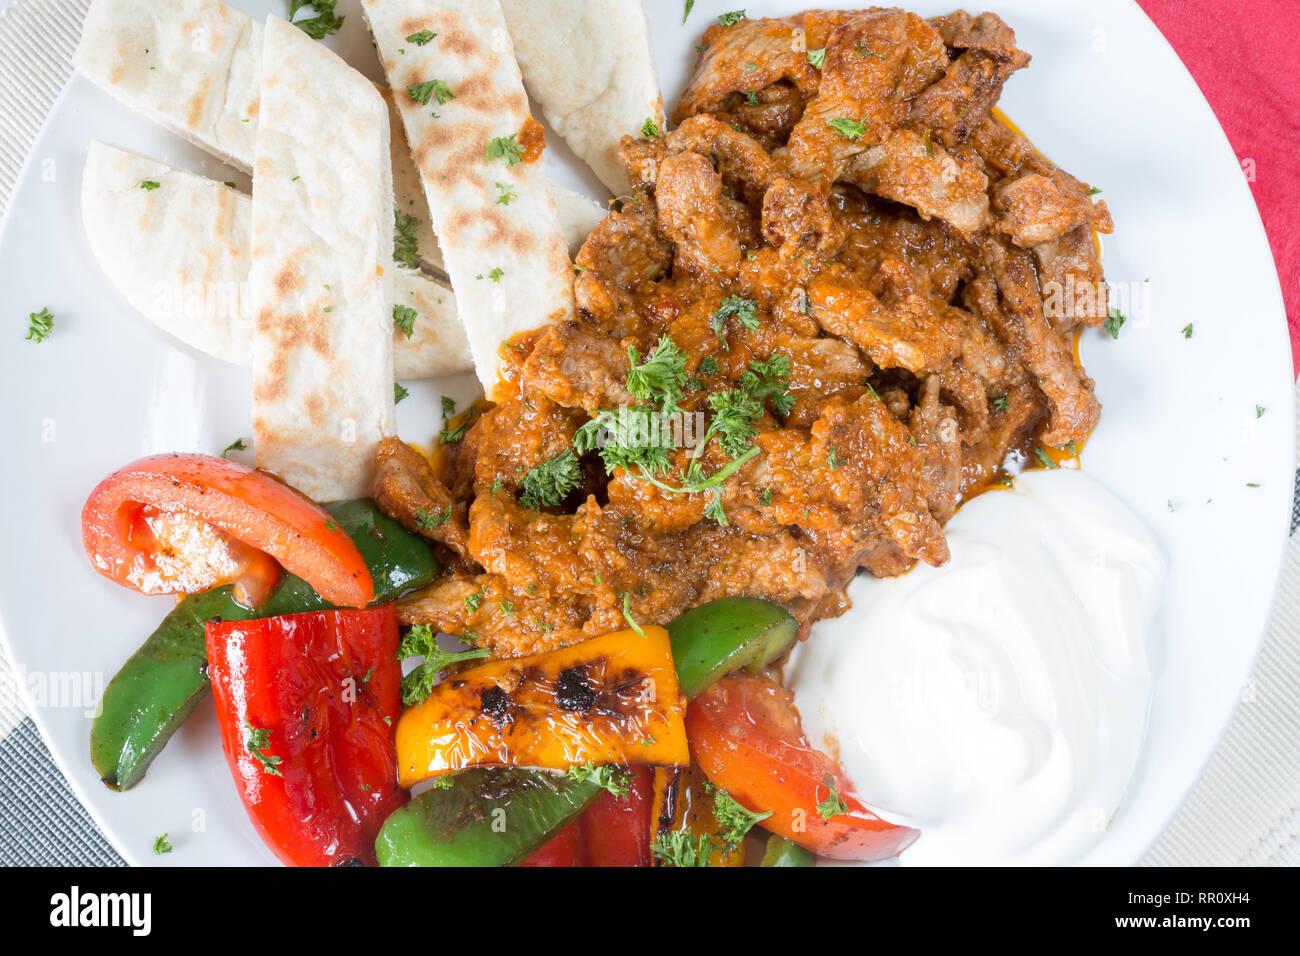 Iskender kebab, a popular traditional street food of Istanbul, Turkey Stock Photo